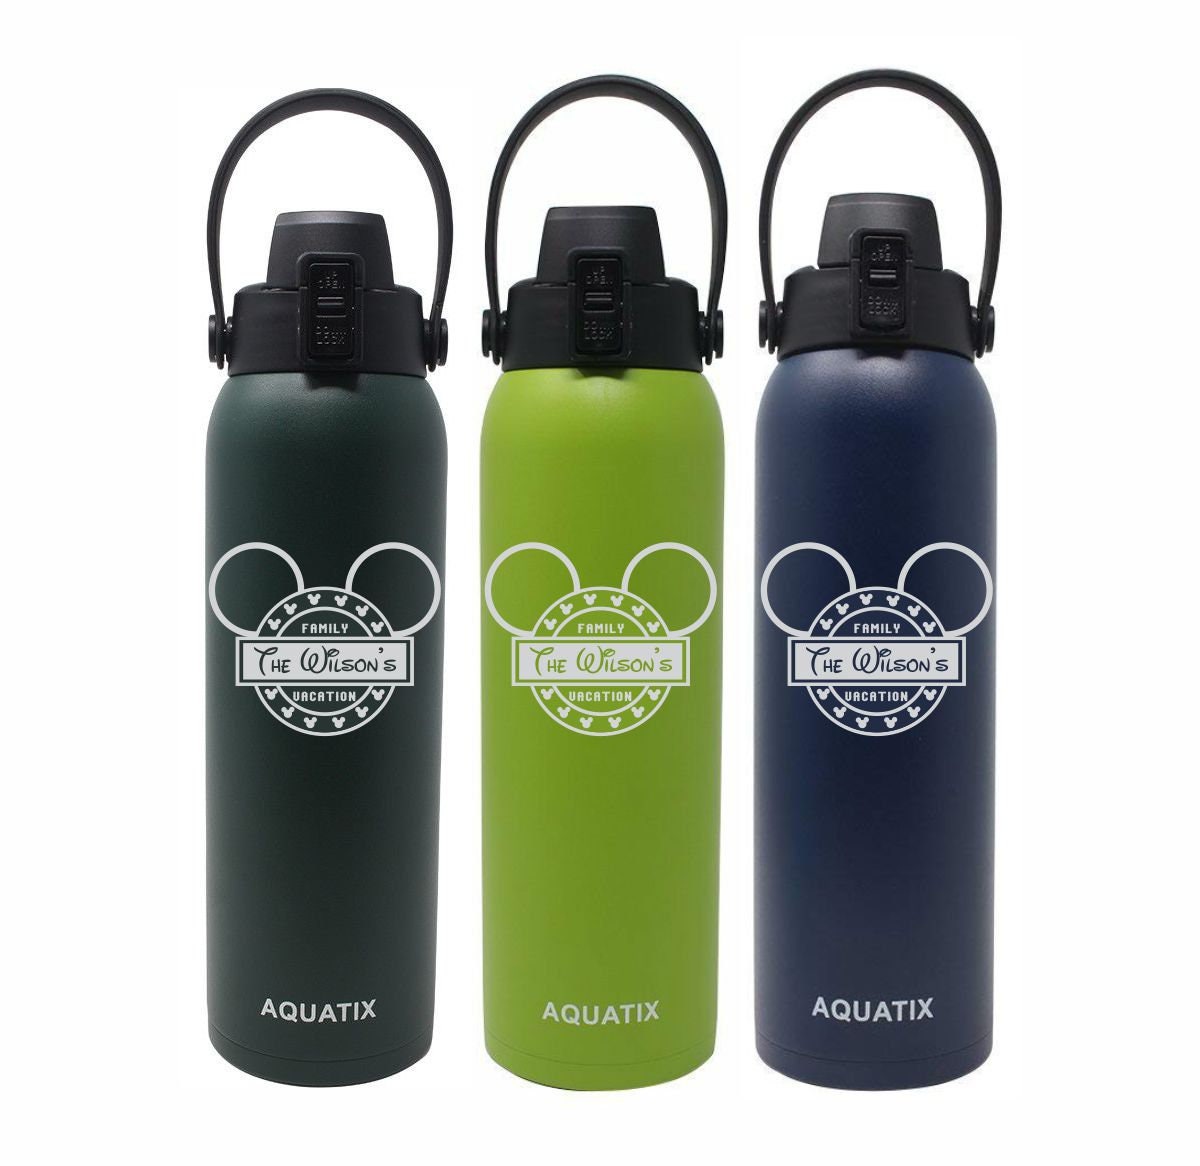 Disney Laser Engraved 17oz Stainless Steel Water Bottles Personalized Water  Bottle Custom Water Bottle mickey Minnie Free Shipping 